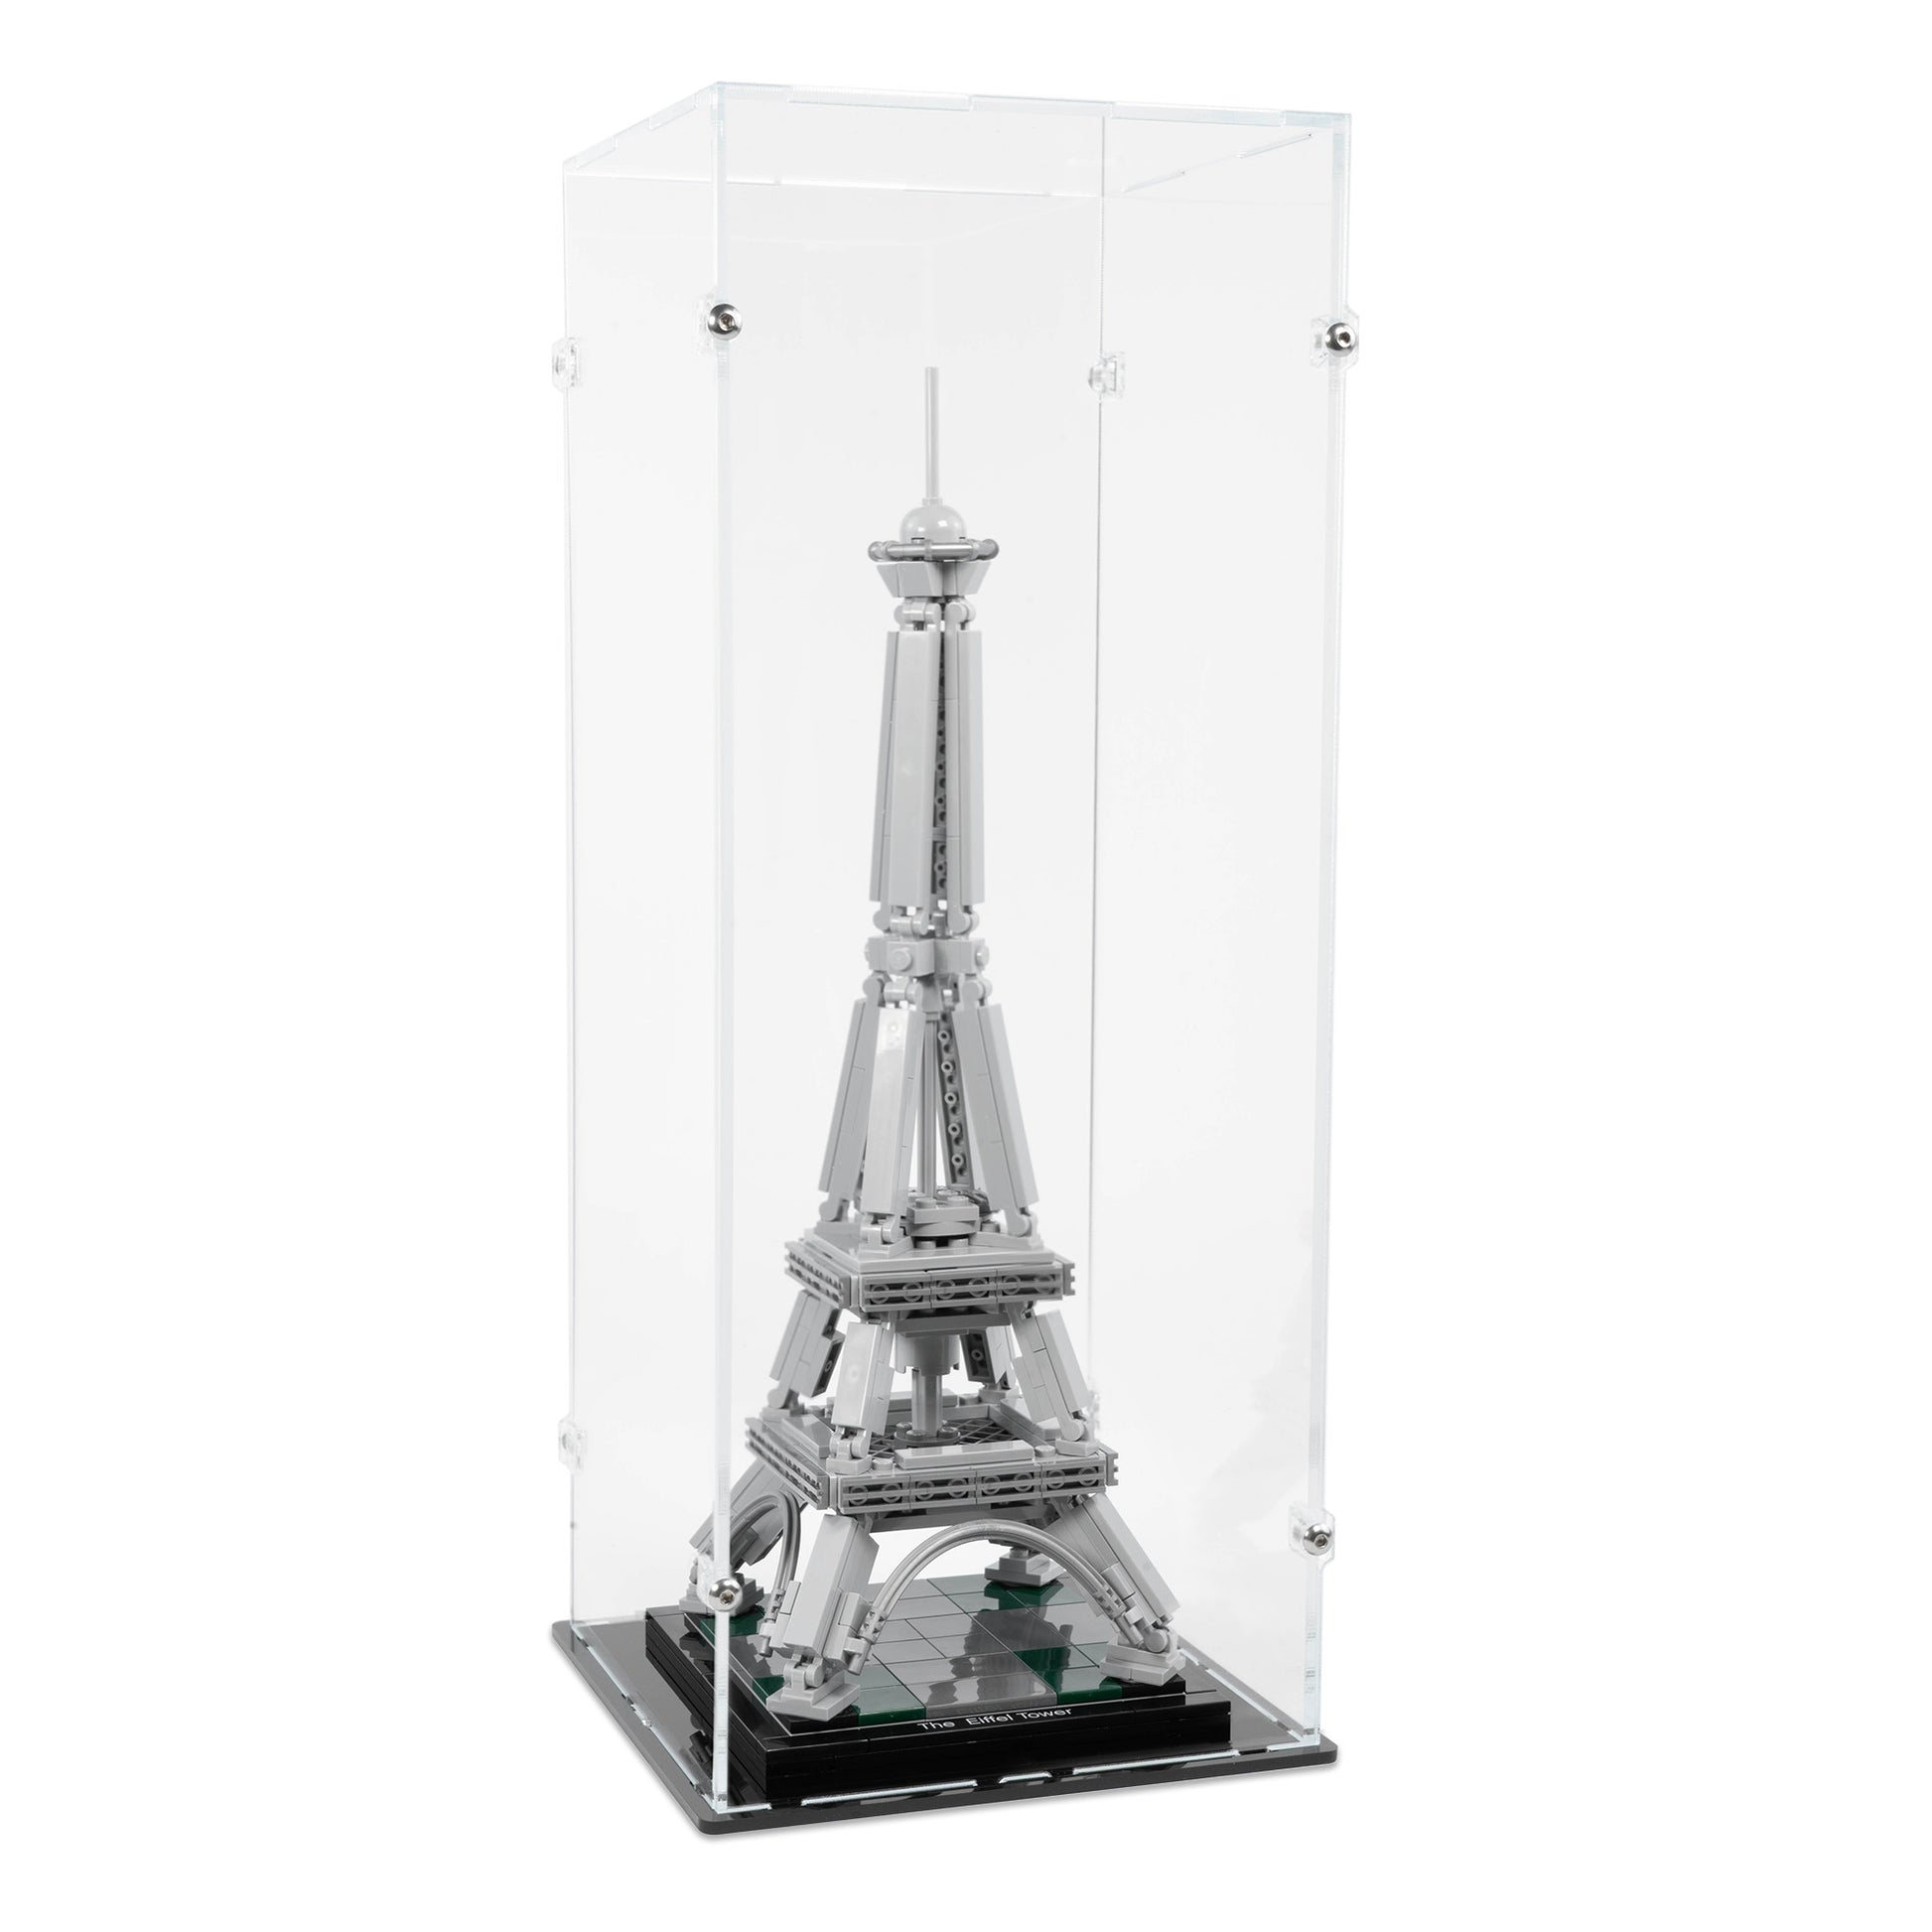 LEGO Architecture The Eiffel Tower Set 21019 - IT